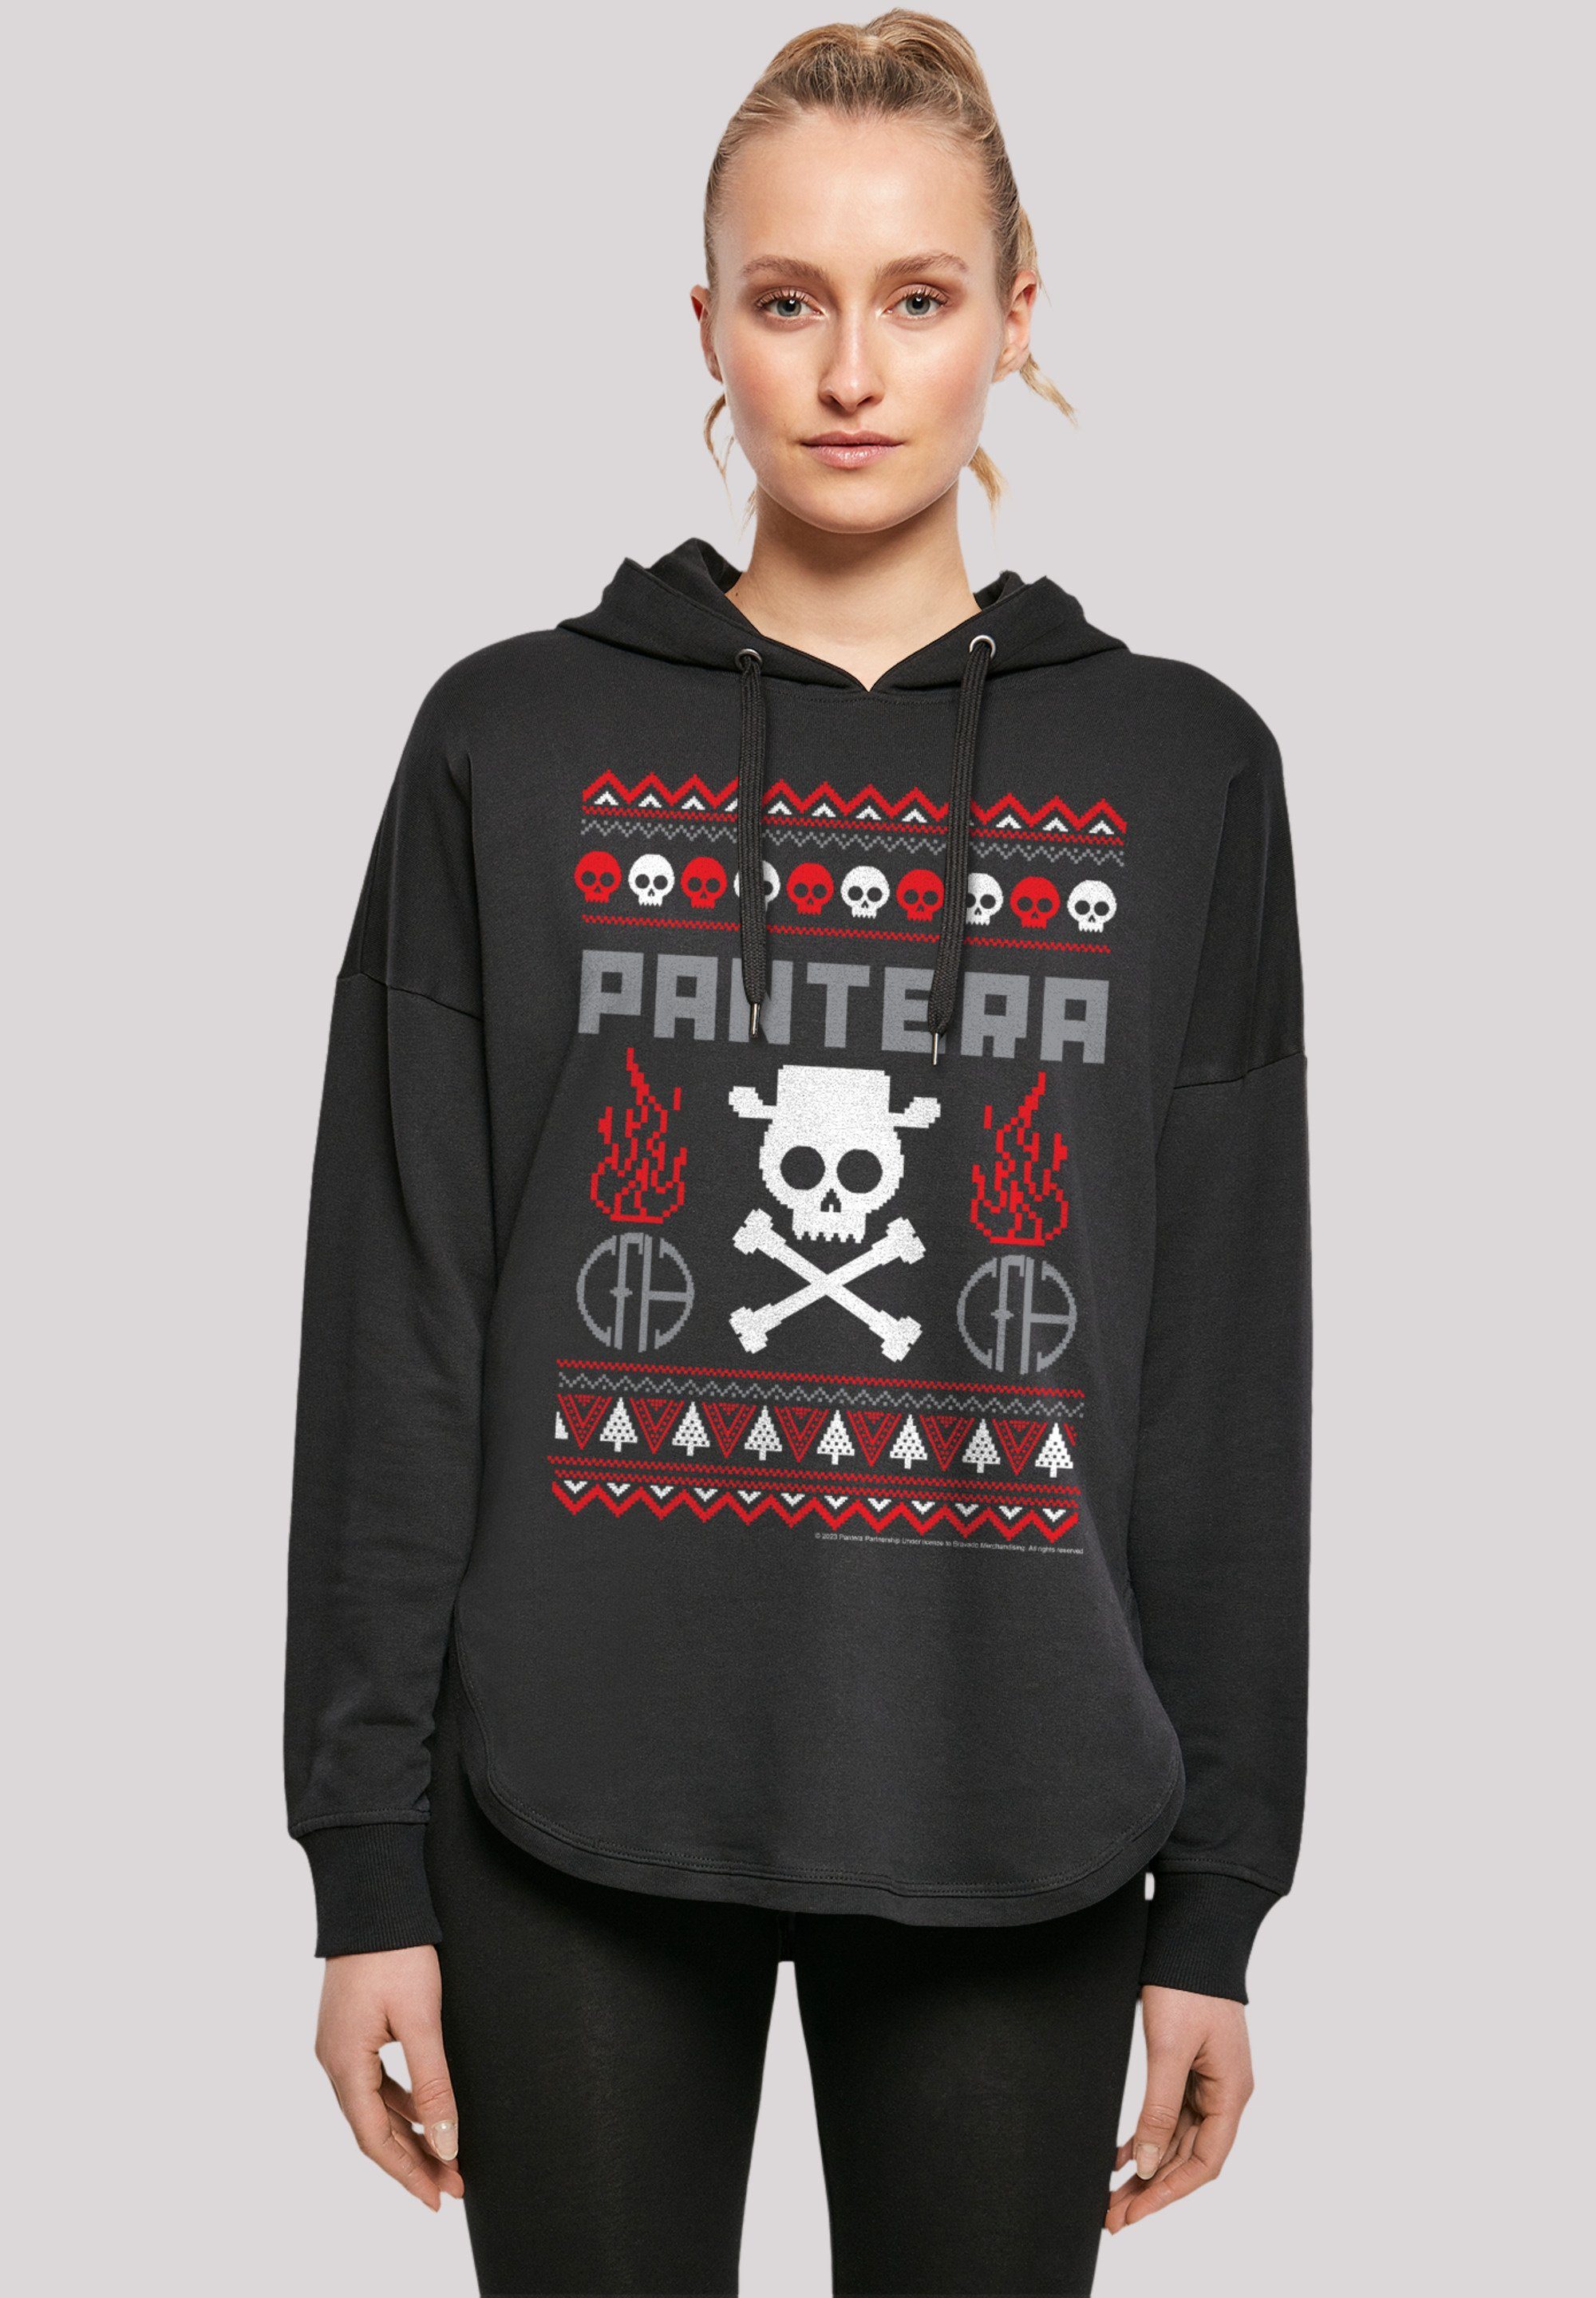 F4NT4STIC Sweatshirt Pantera Weihnachten Christmas Musik, Band, Logo | Sweatshirts